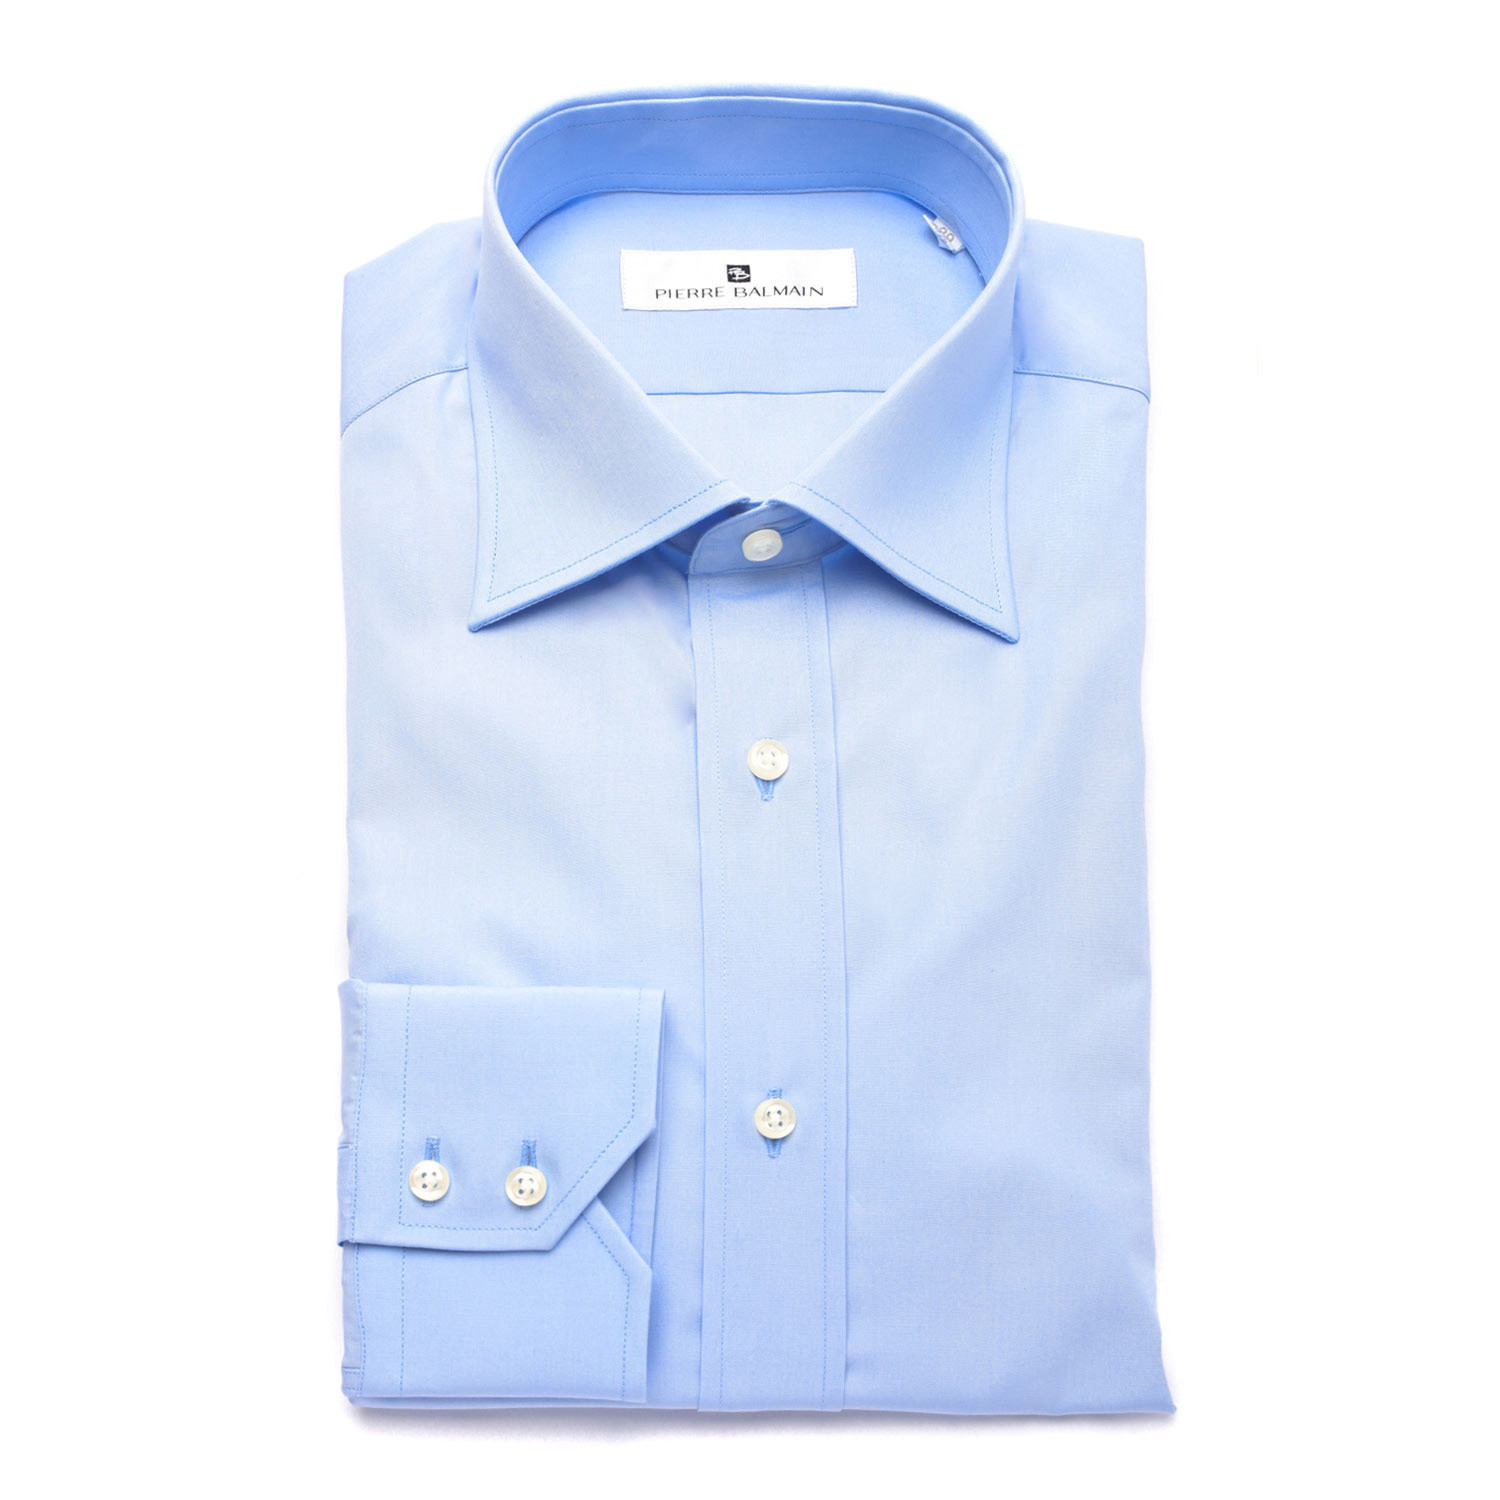 Pierre Balmain Dress Shirt // Baby Blue (US: 15.5R) - Fashion // Luxe ...